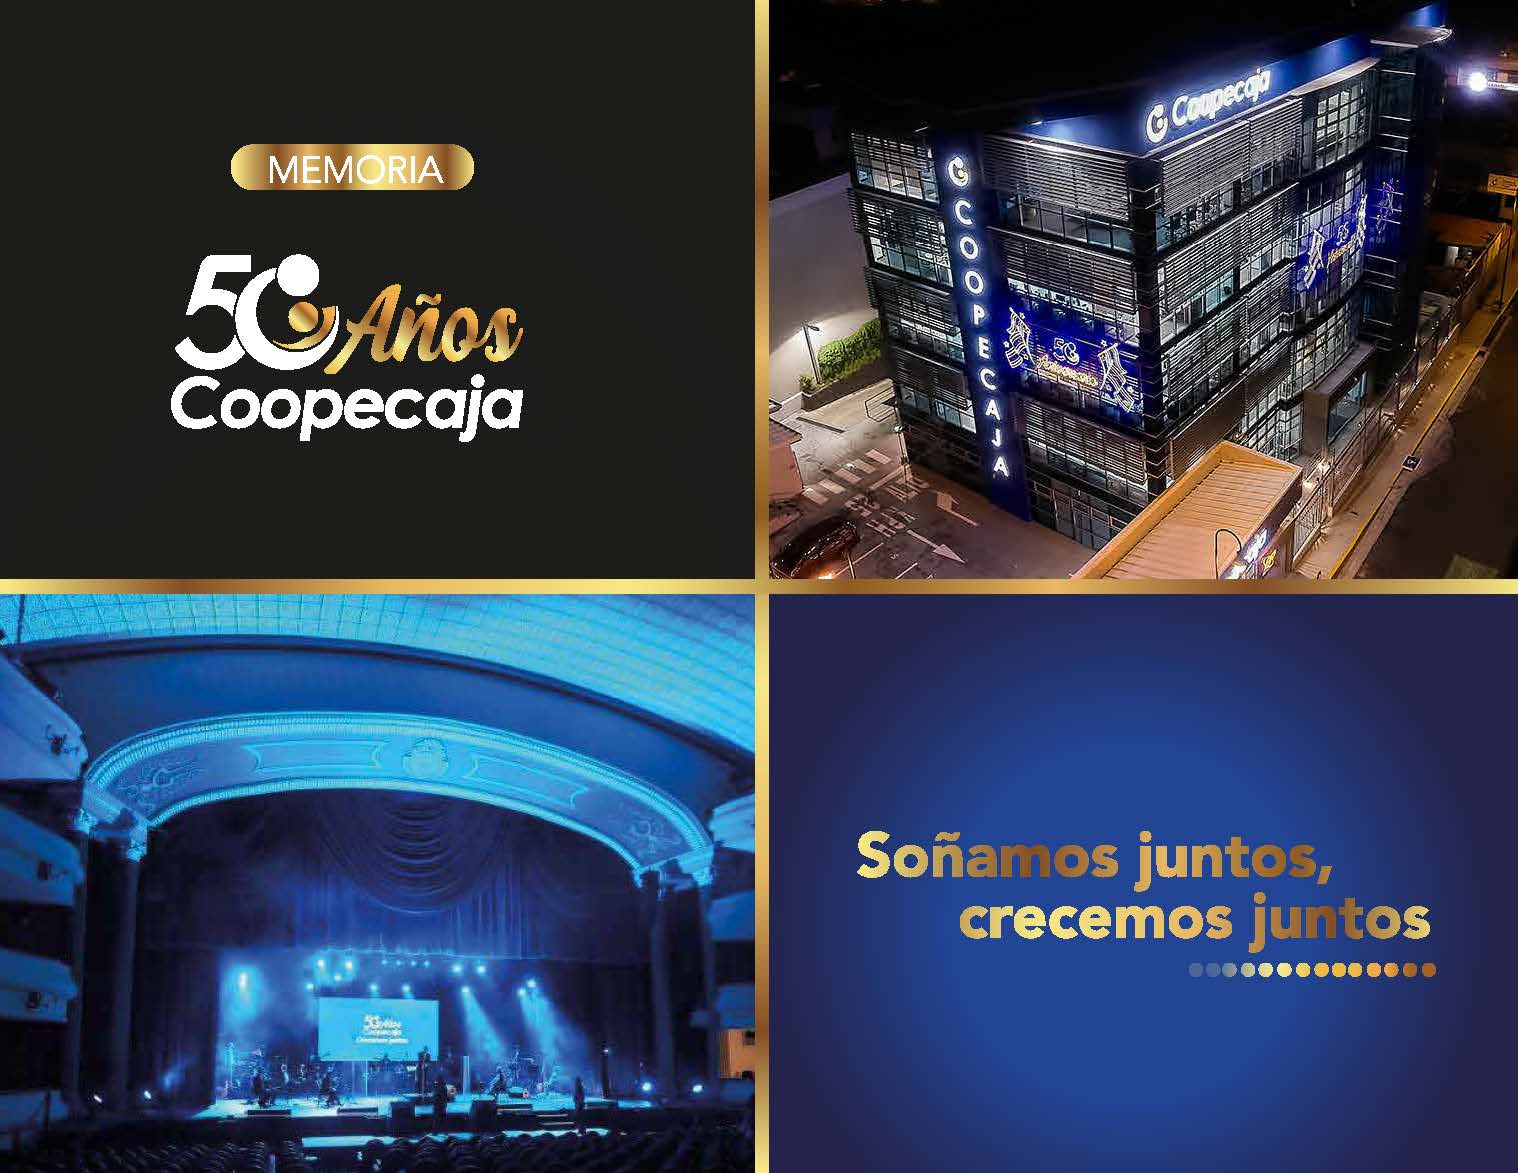 Imagen de la memoria 50 aniversario Coopecaja